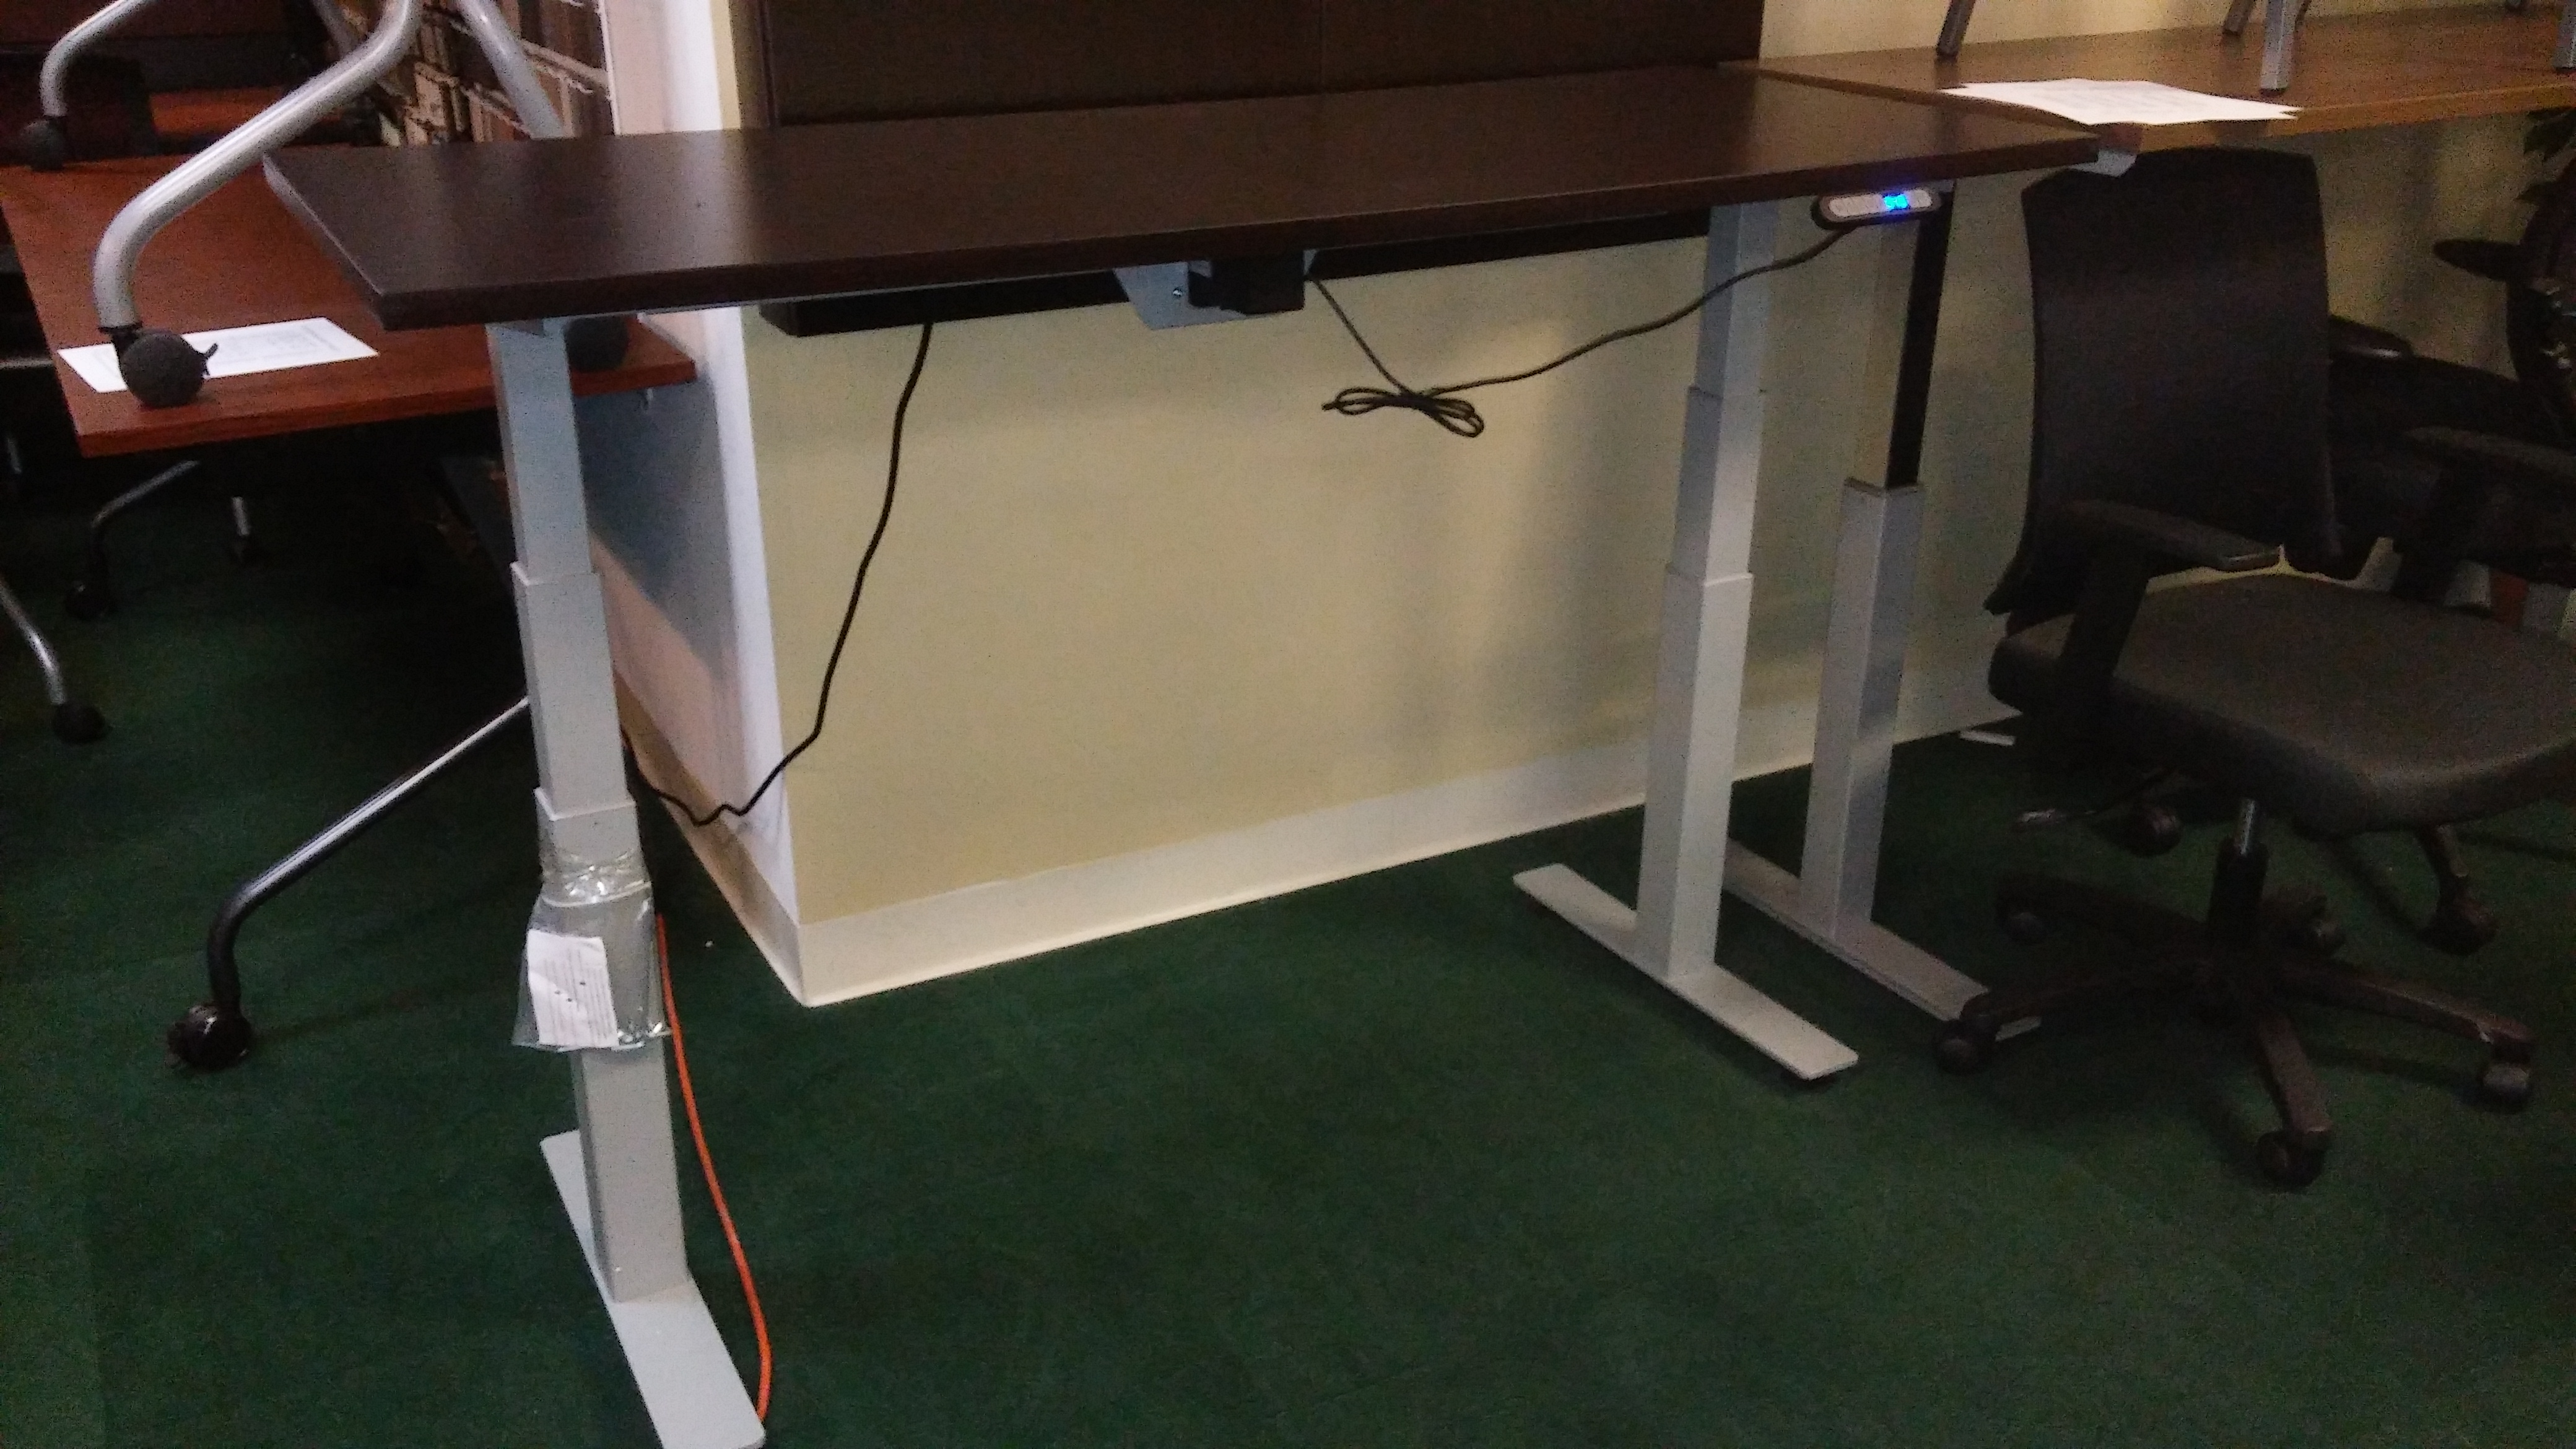 30" x 66" adjustable height table-desk espresso